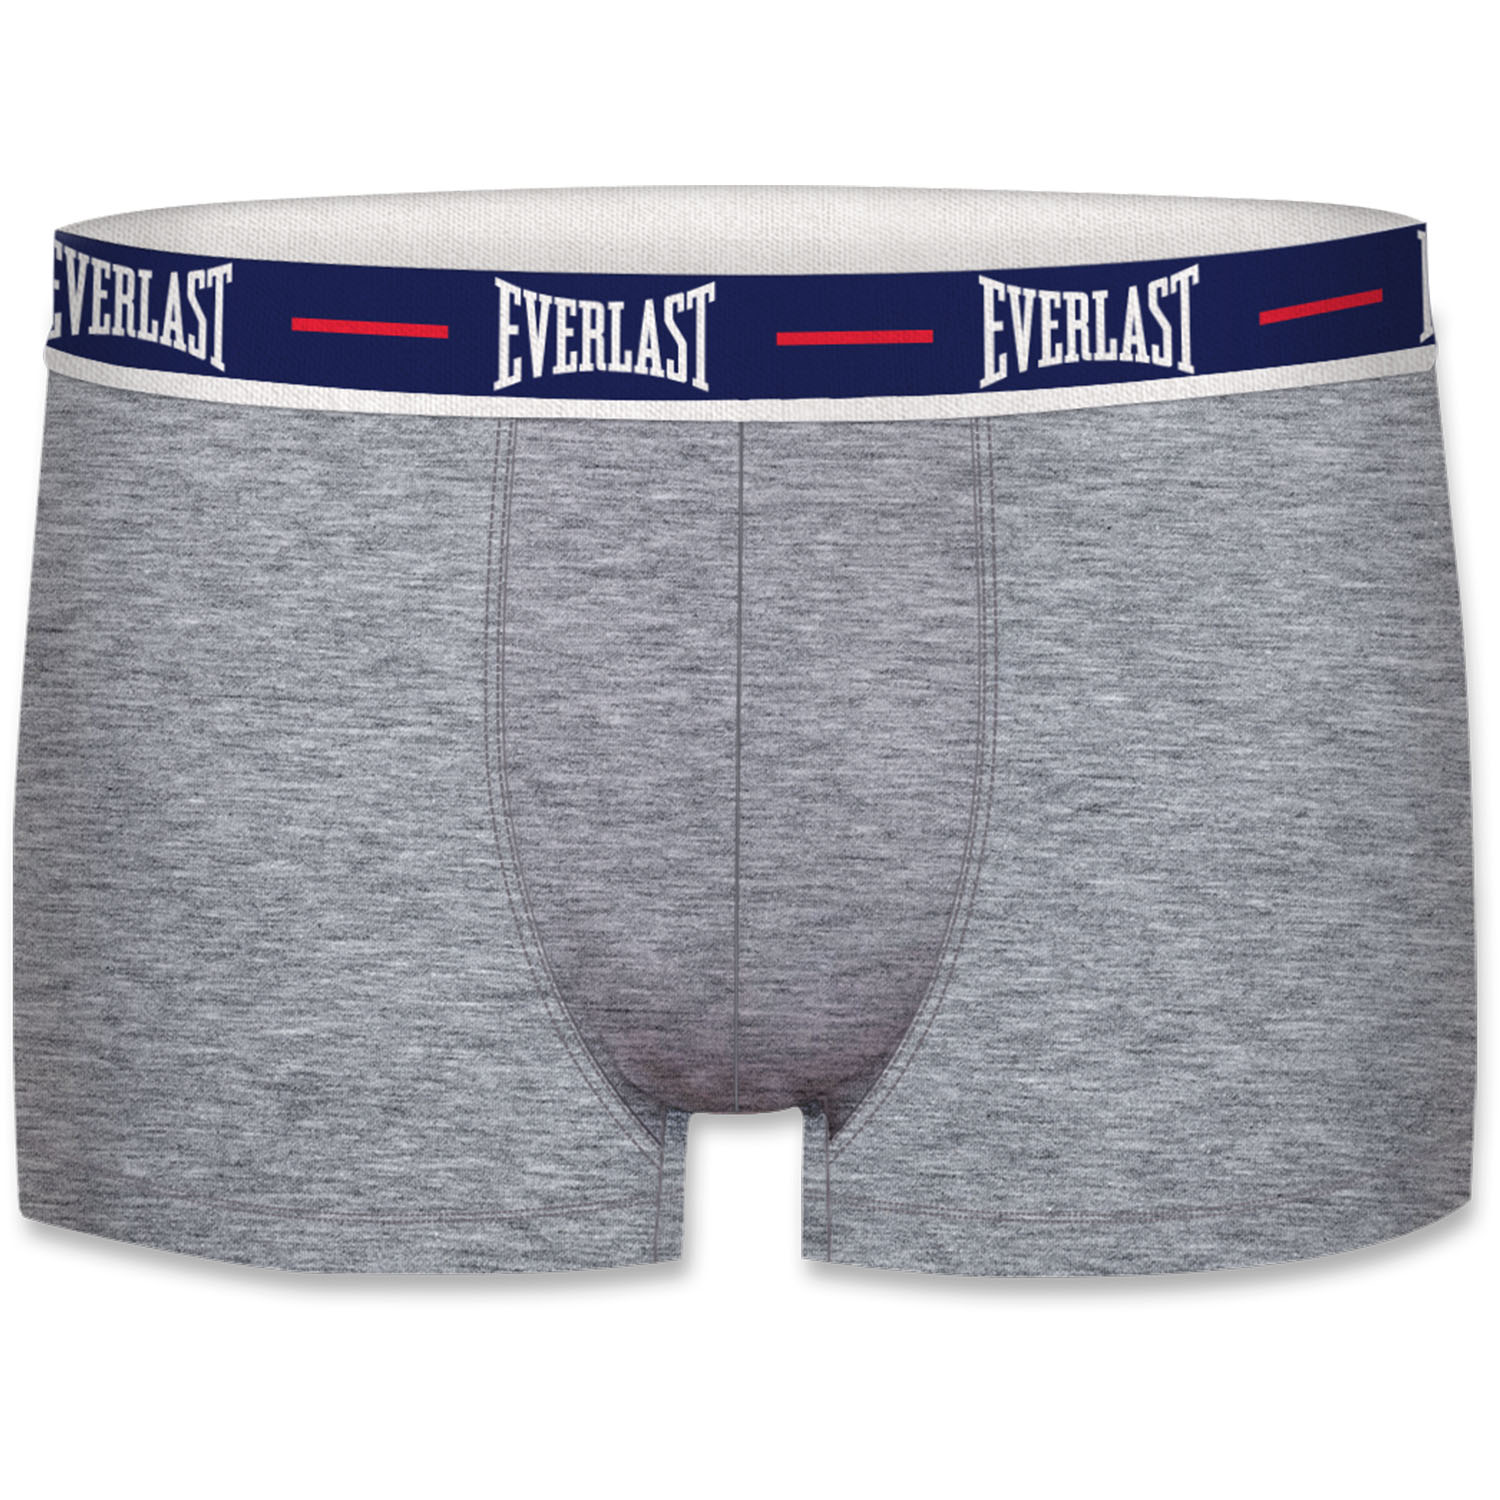 Everlast Boxershorts, AS1, grey, XL